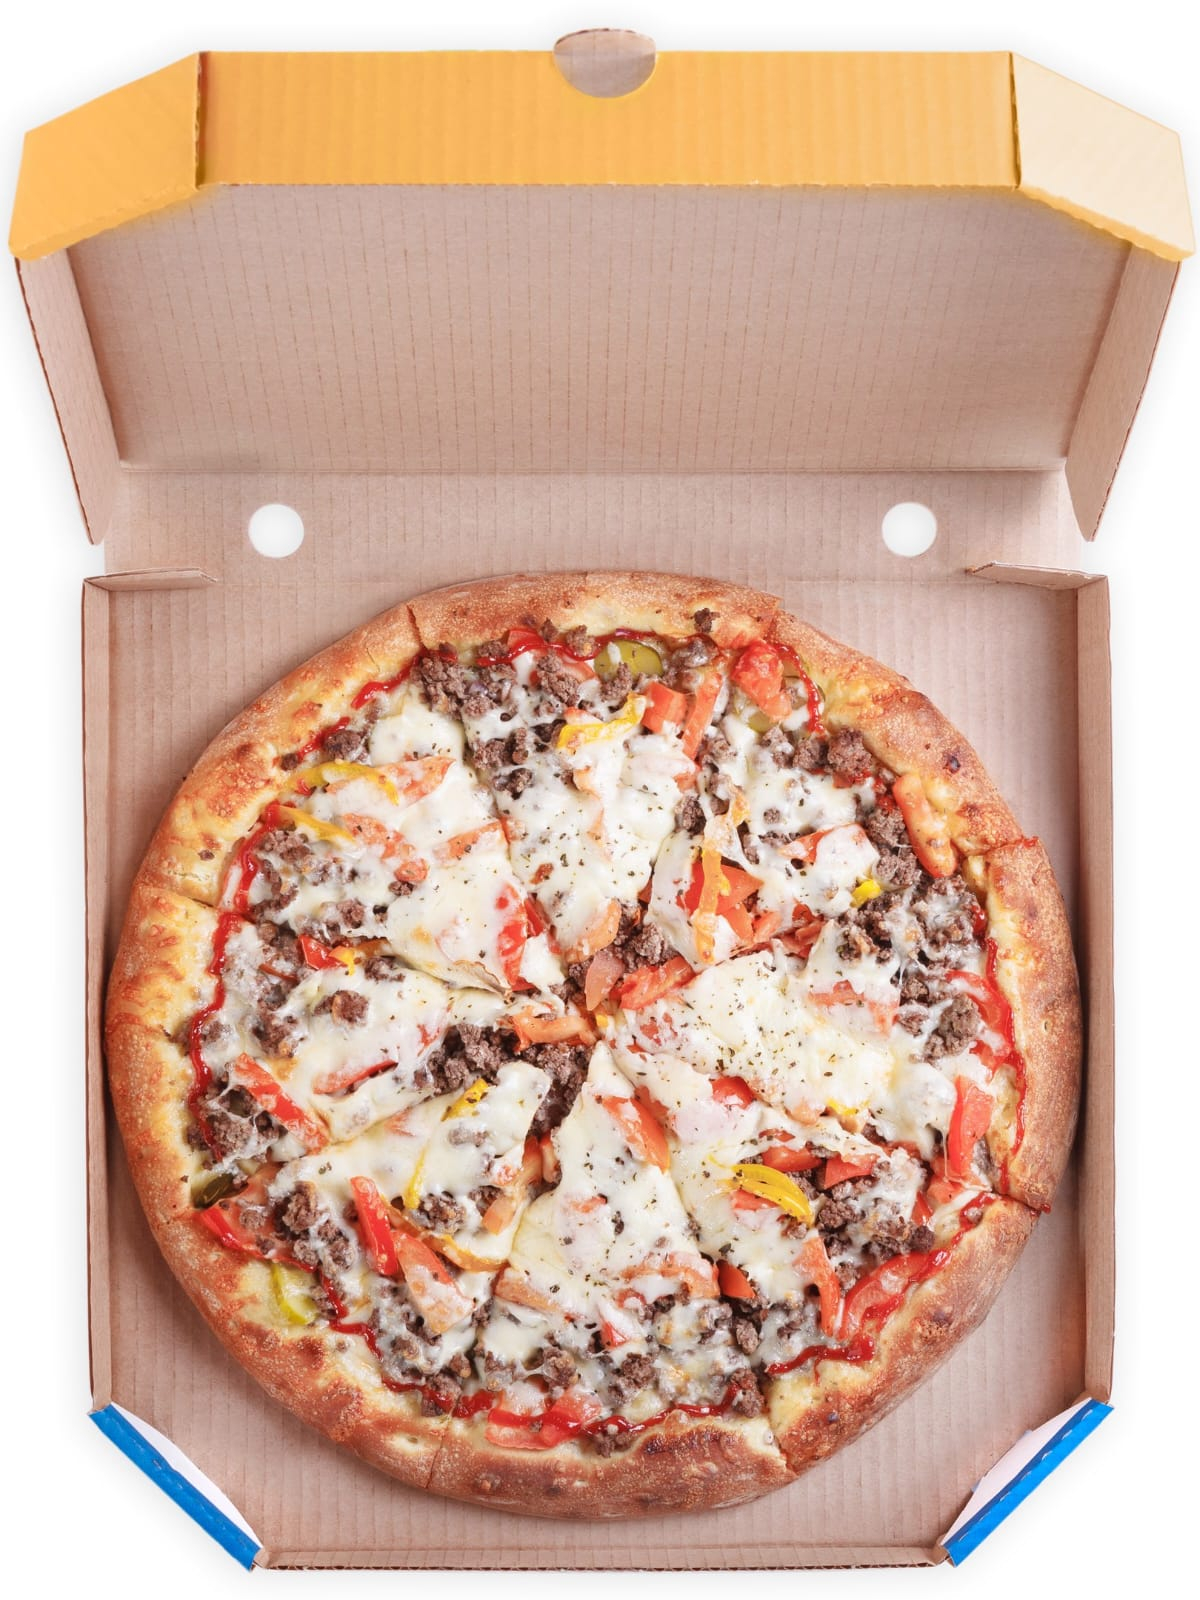 Супер пицца доставка. Пицца супер мясная. Международный день пиццы. Пицца на день рождения. Супер пицца плюс.